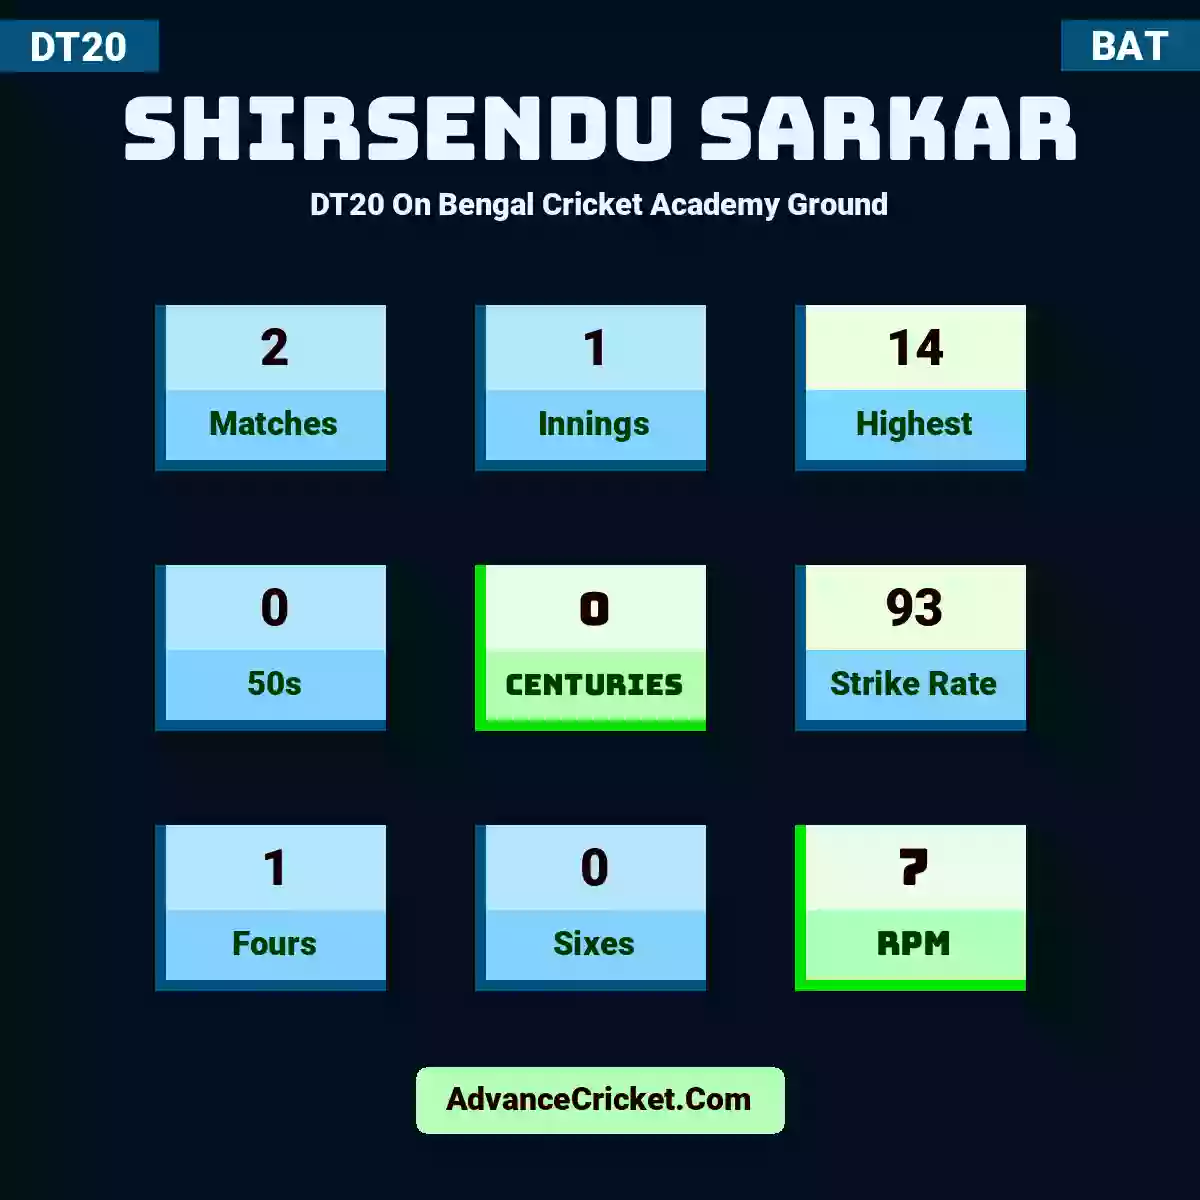 Shirsendu Sarkar DT20  On Bengal Cricket Academy Ground, Shirsendu Sarkar played 2 matches, scored 14 runs as highest, 0 half-centuries, and 0 centuries, with a strike rate of 93. S.Sarkar hit 1 fours and 0 sixes, with an RPM of 7.